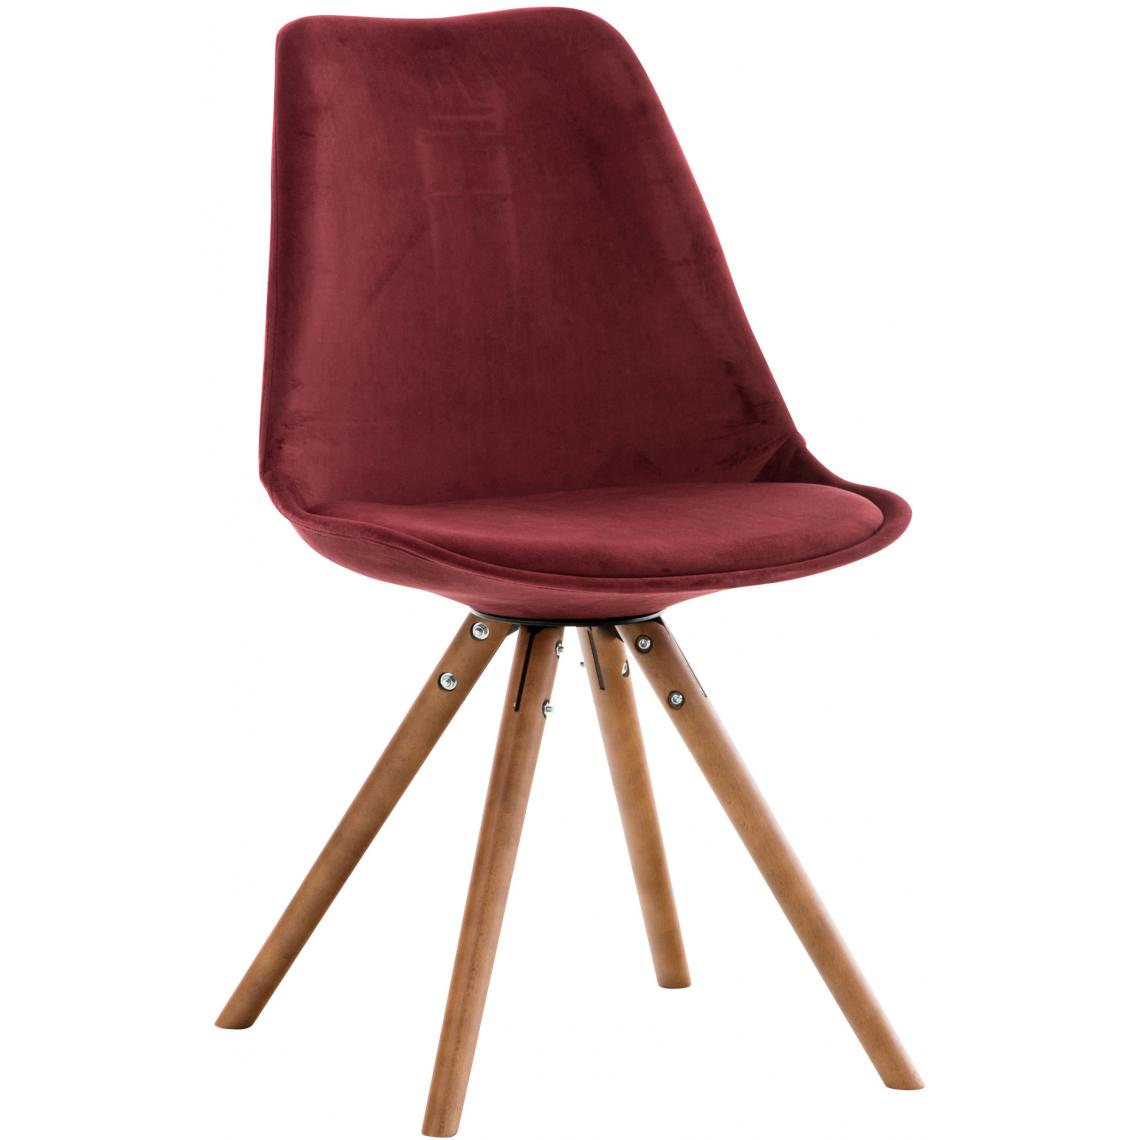 Icaverne - Splendide Chaise ronde en velours Manille noyer couleur rouge - Chaises